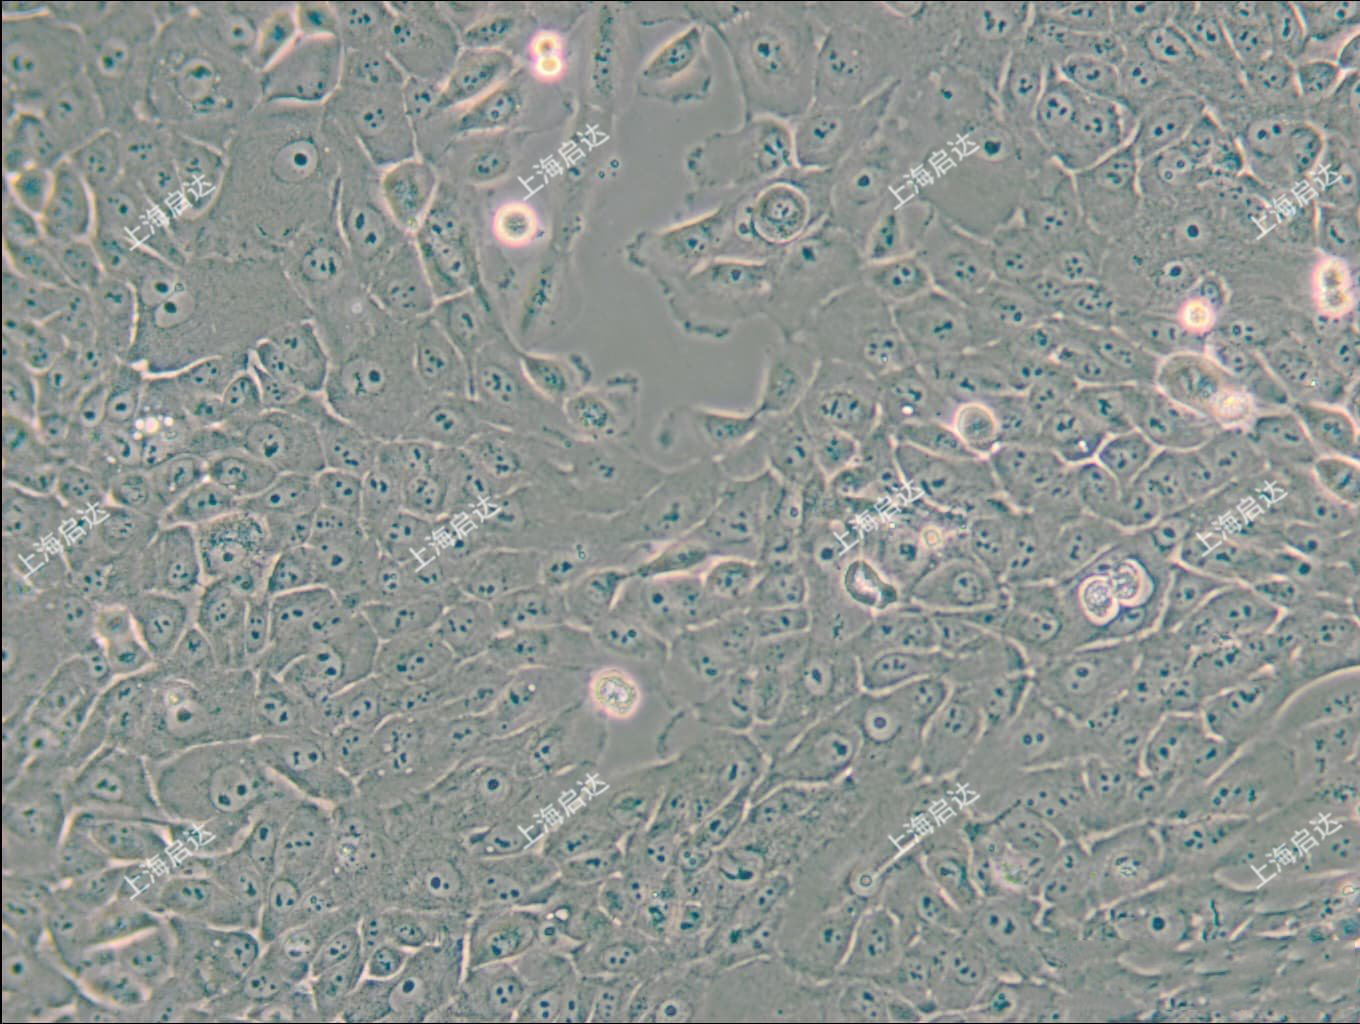 MCF-10A	[MCF 10A]人乳腺上皮细胞